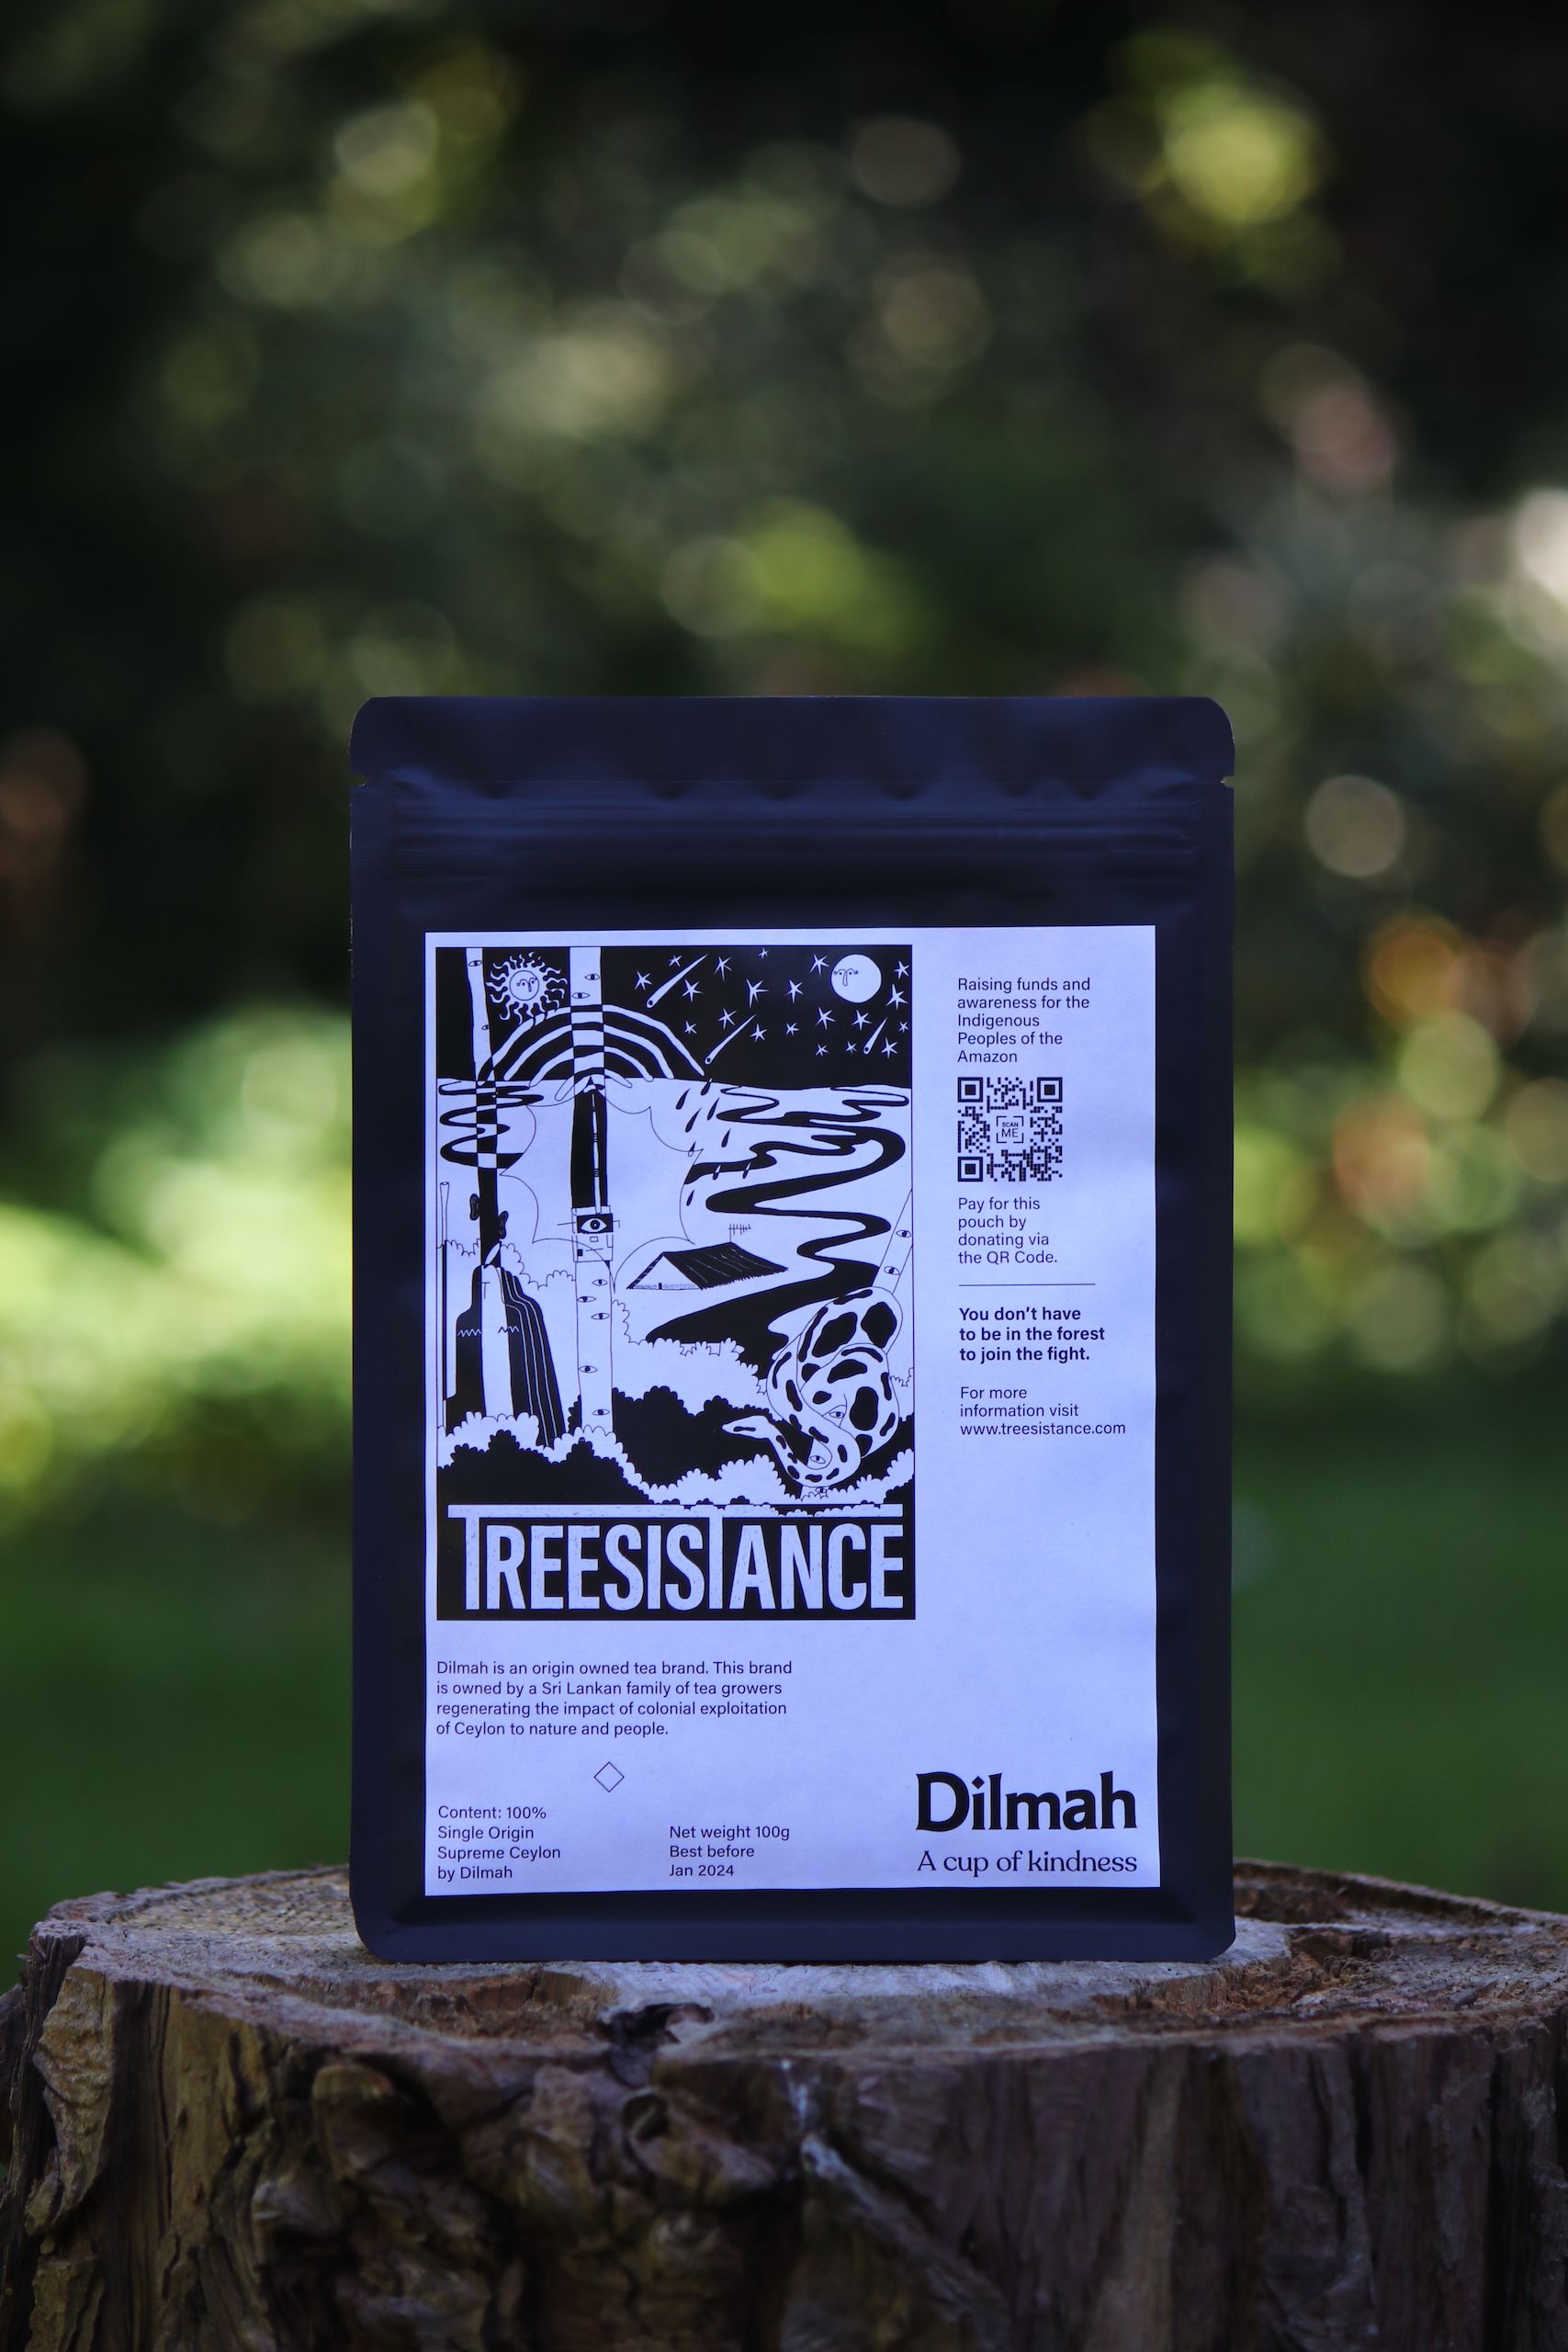 Dilmah Tea x Treesistance Collaboration